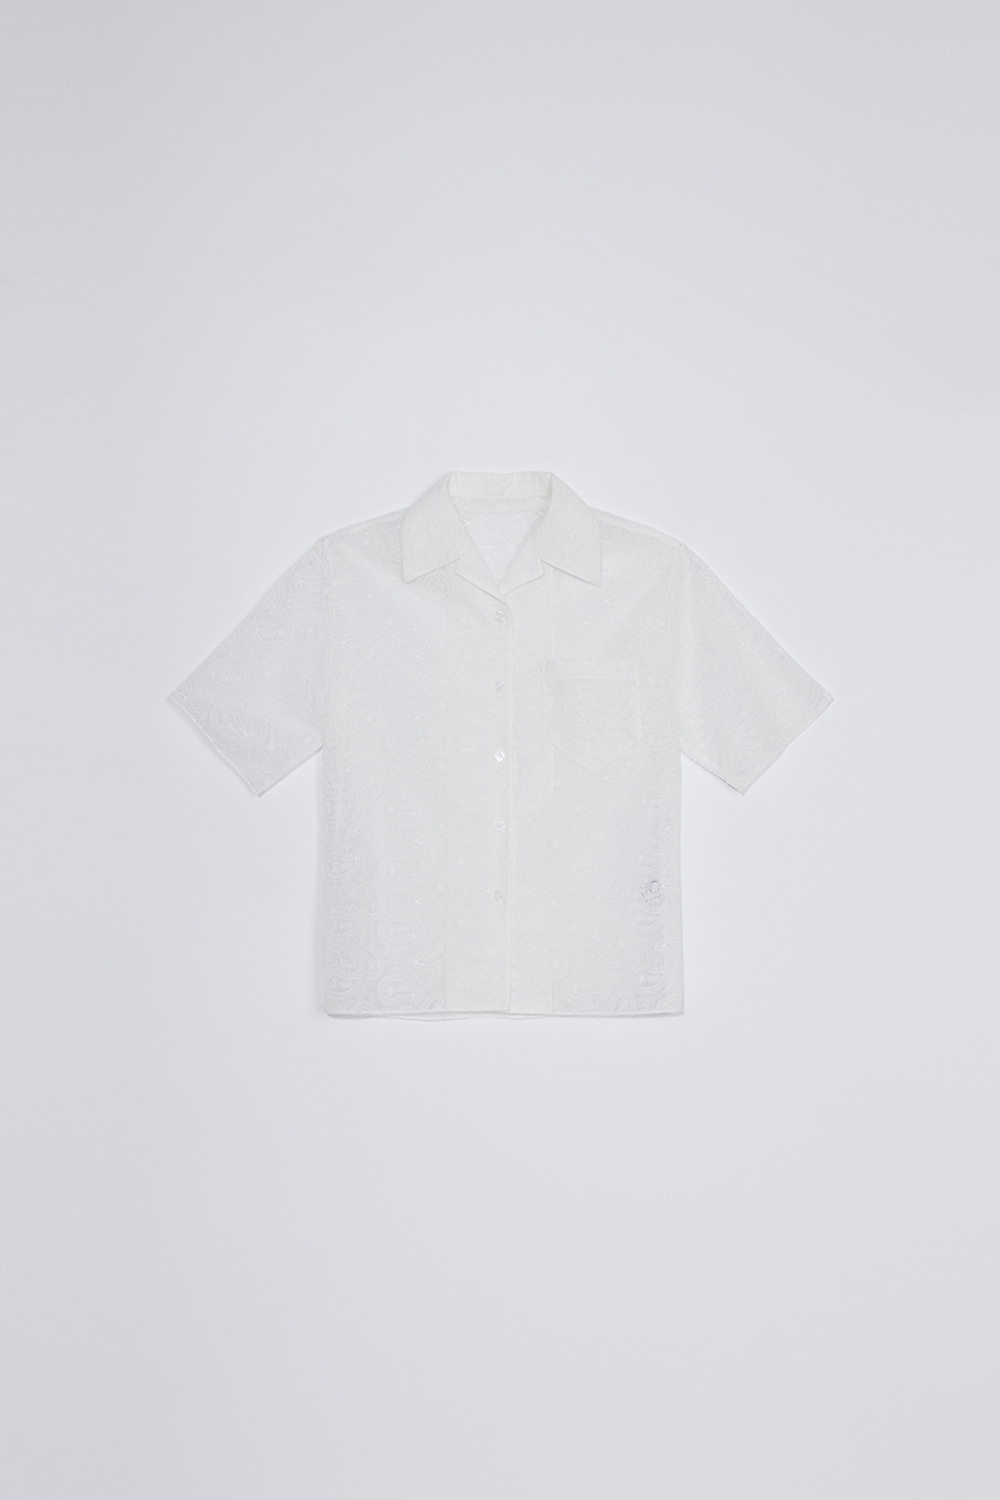 Half-sleeve shirt_white (paisley)